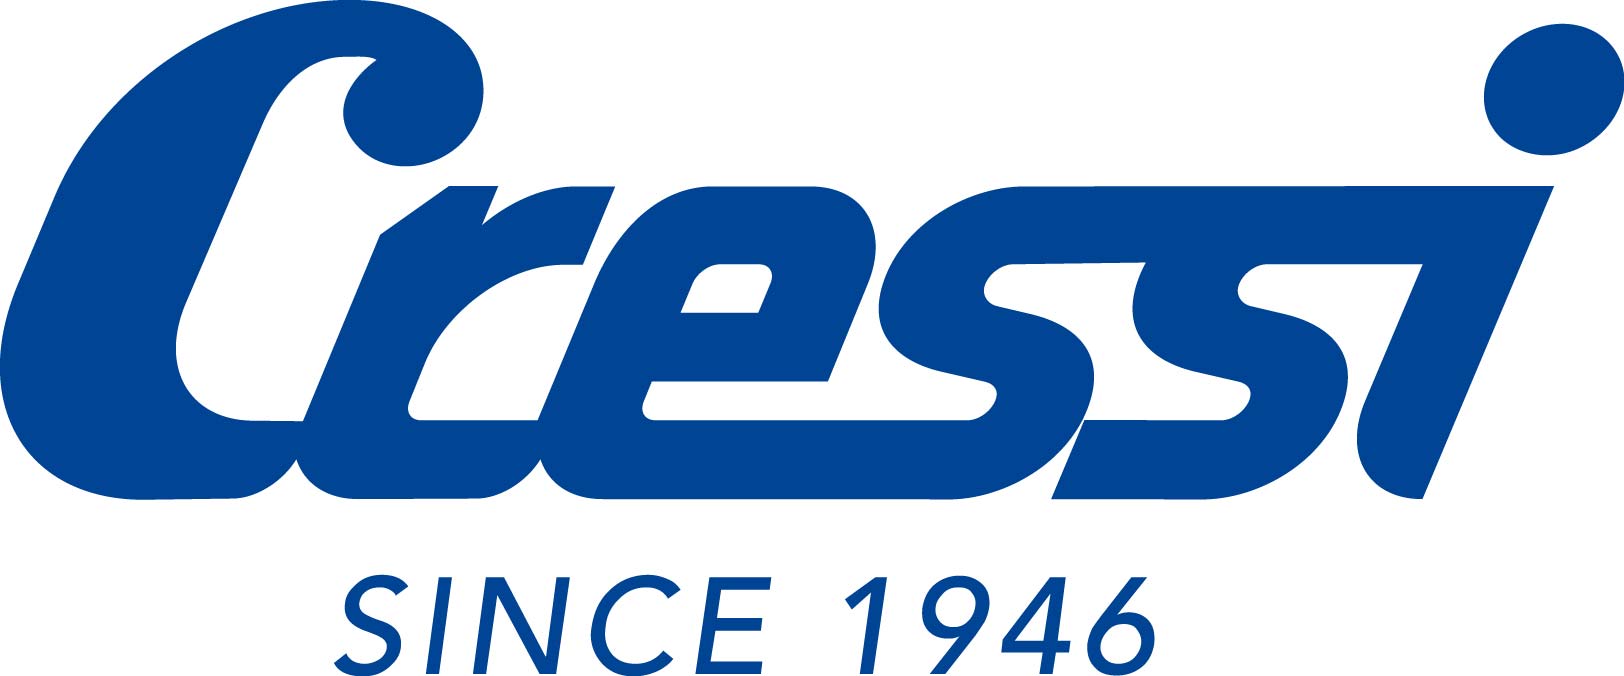 contest/logo_cressi_since1946_blu_rev01.jpg